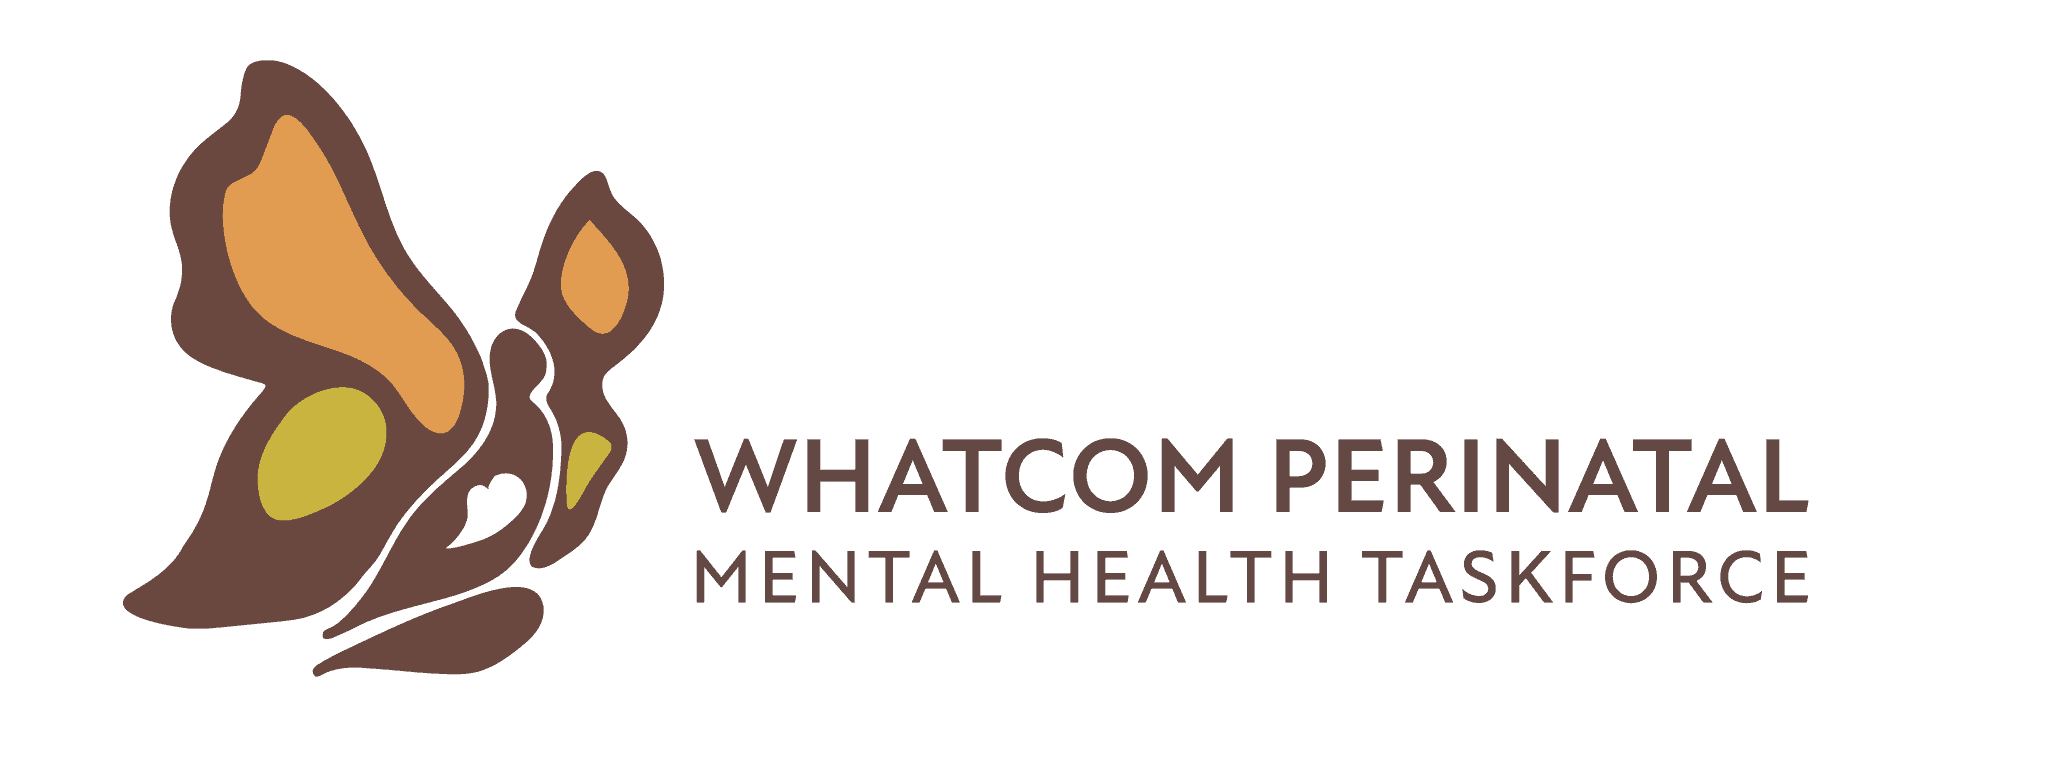 Whatcom Perinatal Task Force